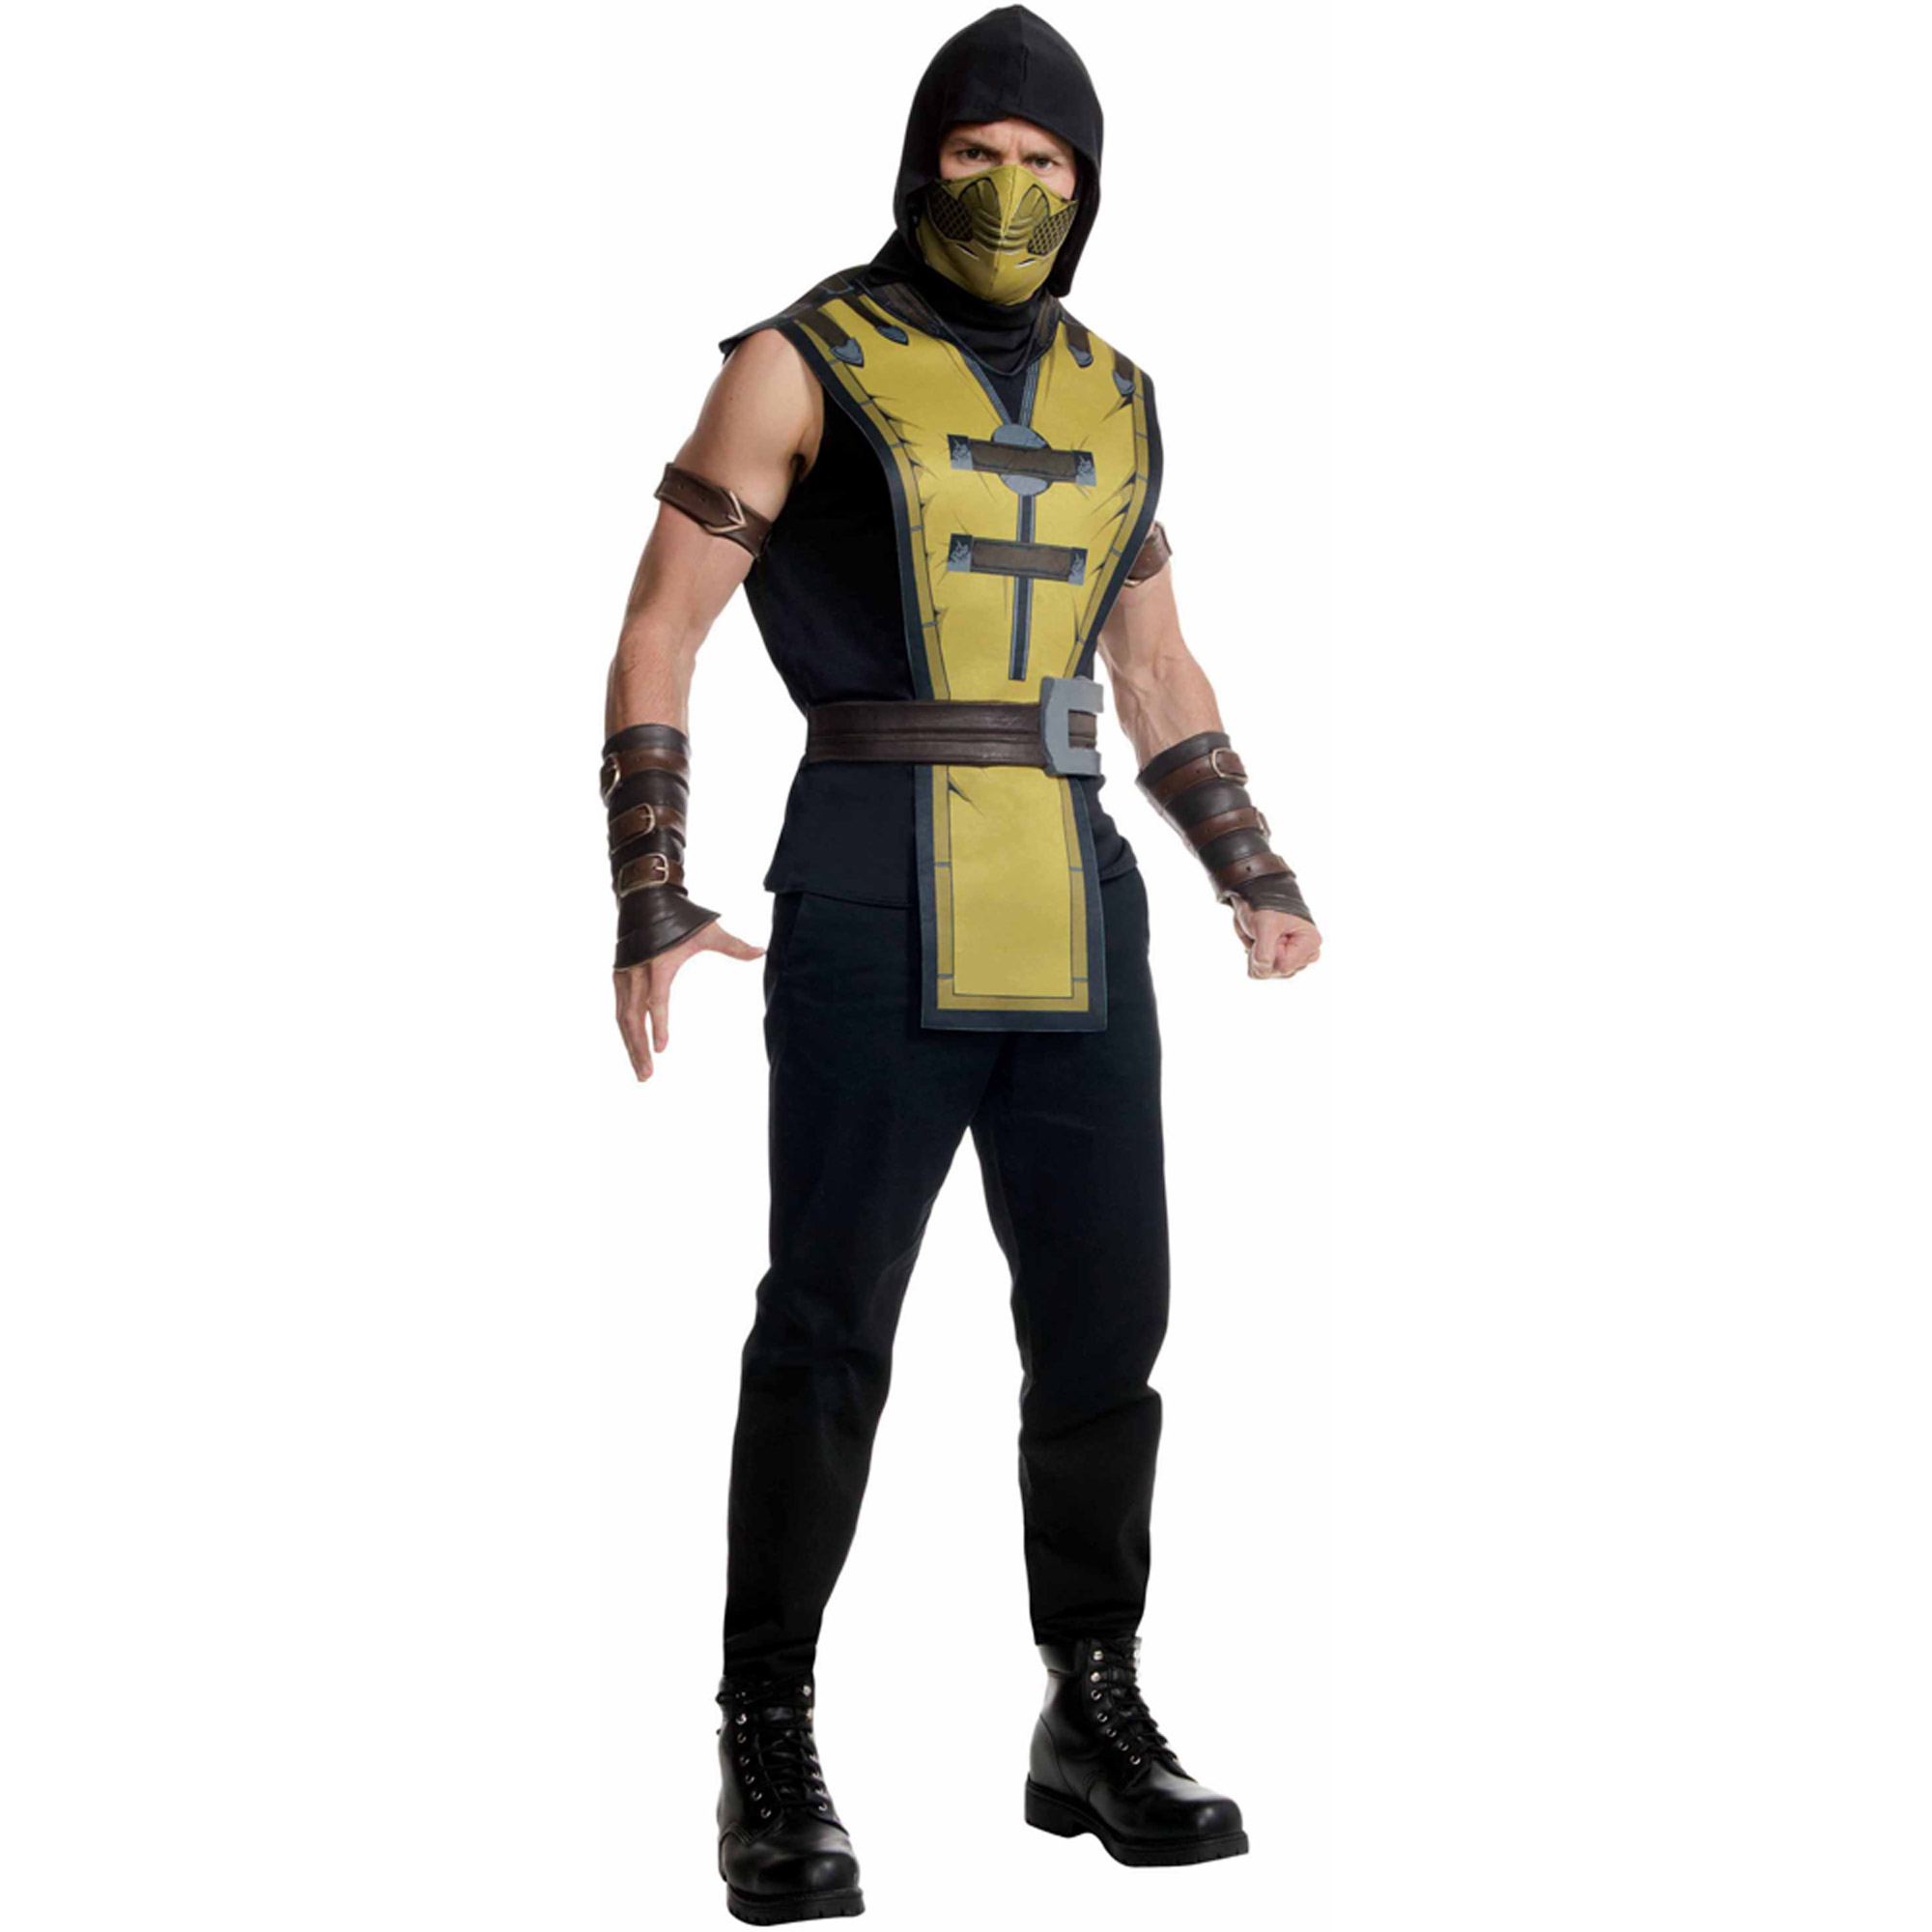 Mortal Combat "Scorpion" Mens Halloween Costume - image 1 of 1